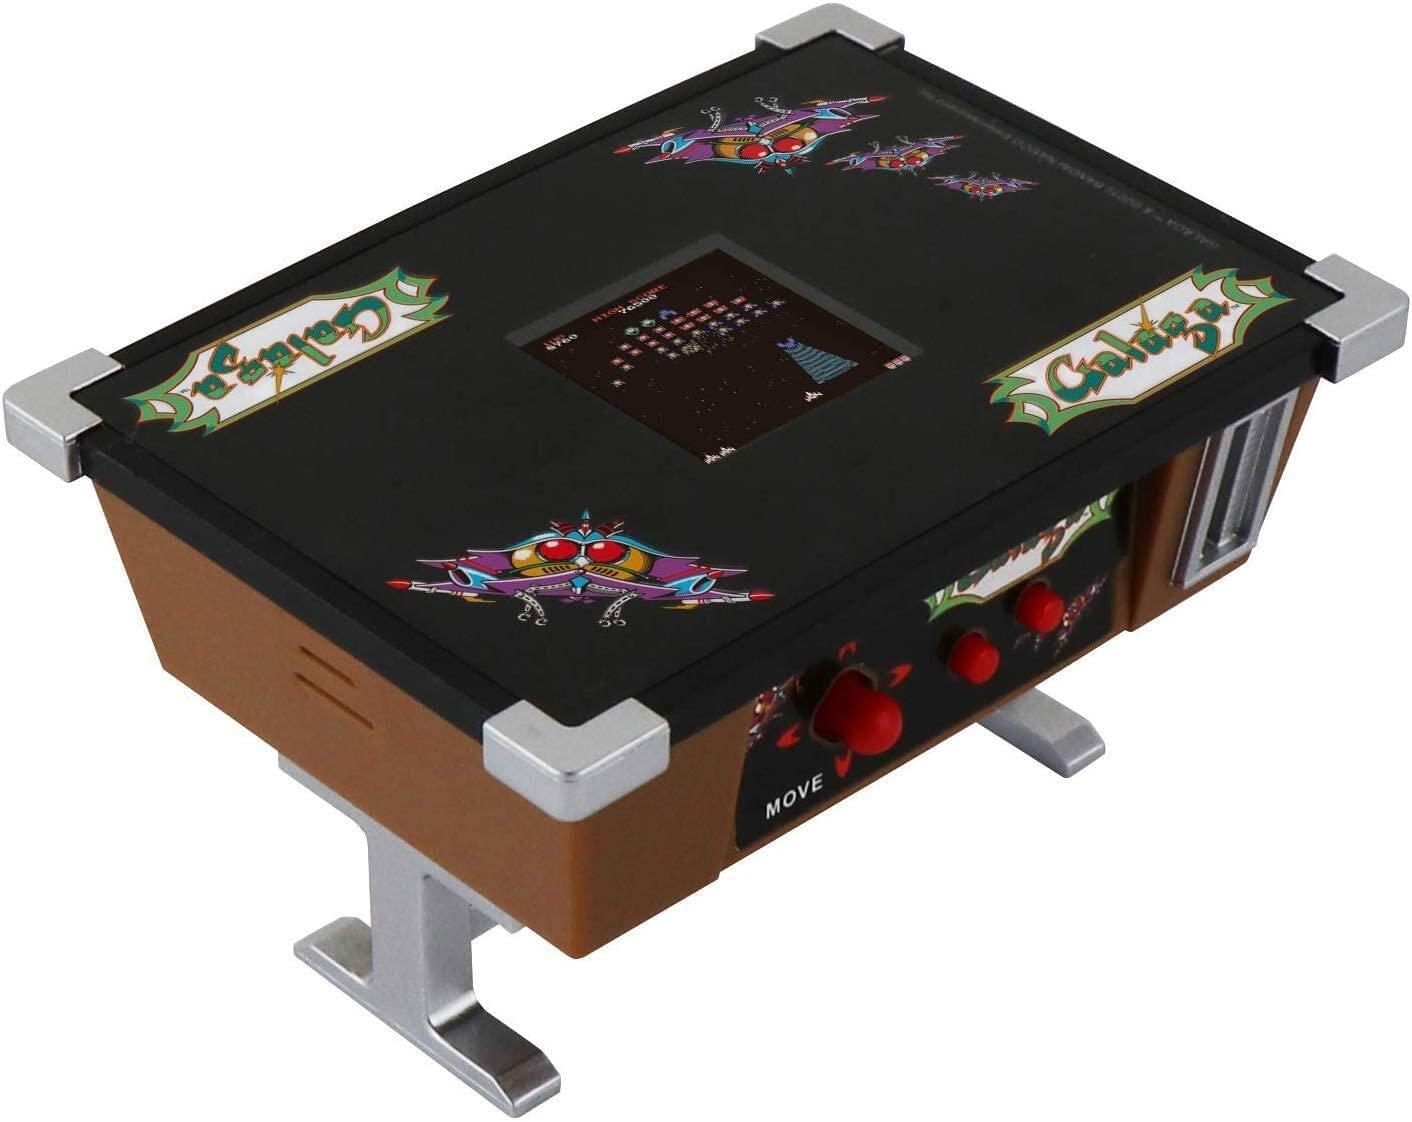 Tiny Arcade Miniature Video Game | Galaga Tabletop Edition